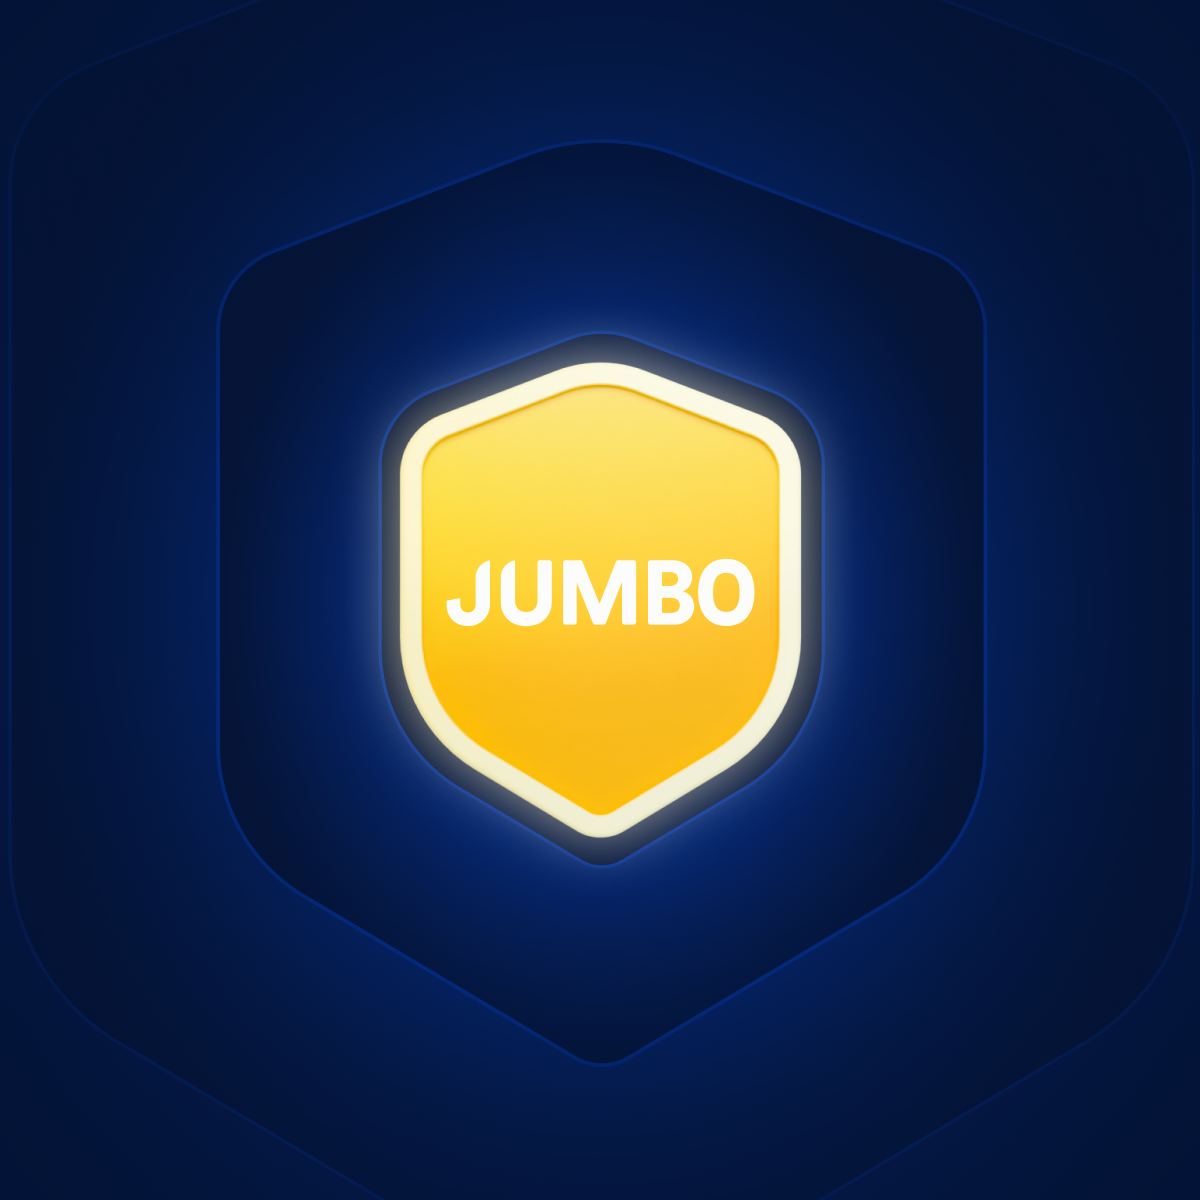 TBO Jumbo Online: TBO acquires online business of Jumbo Tours